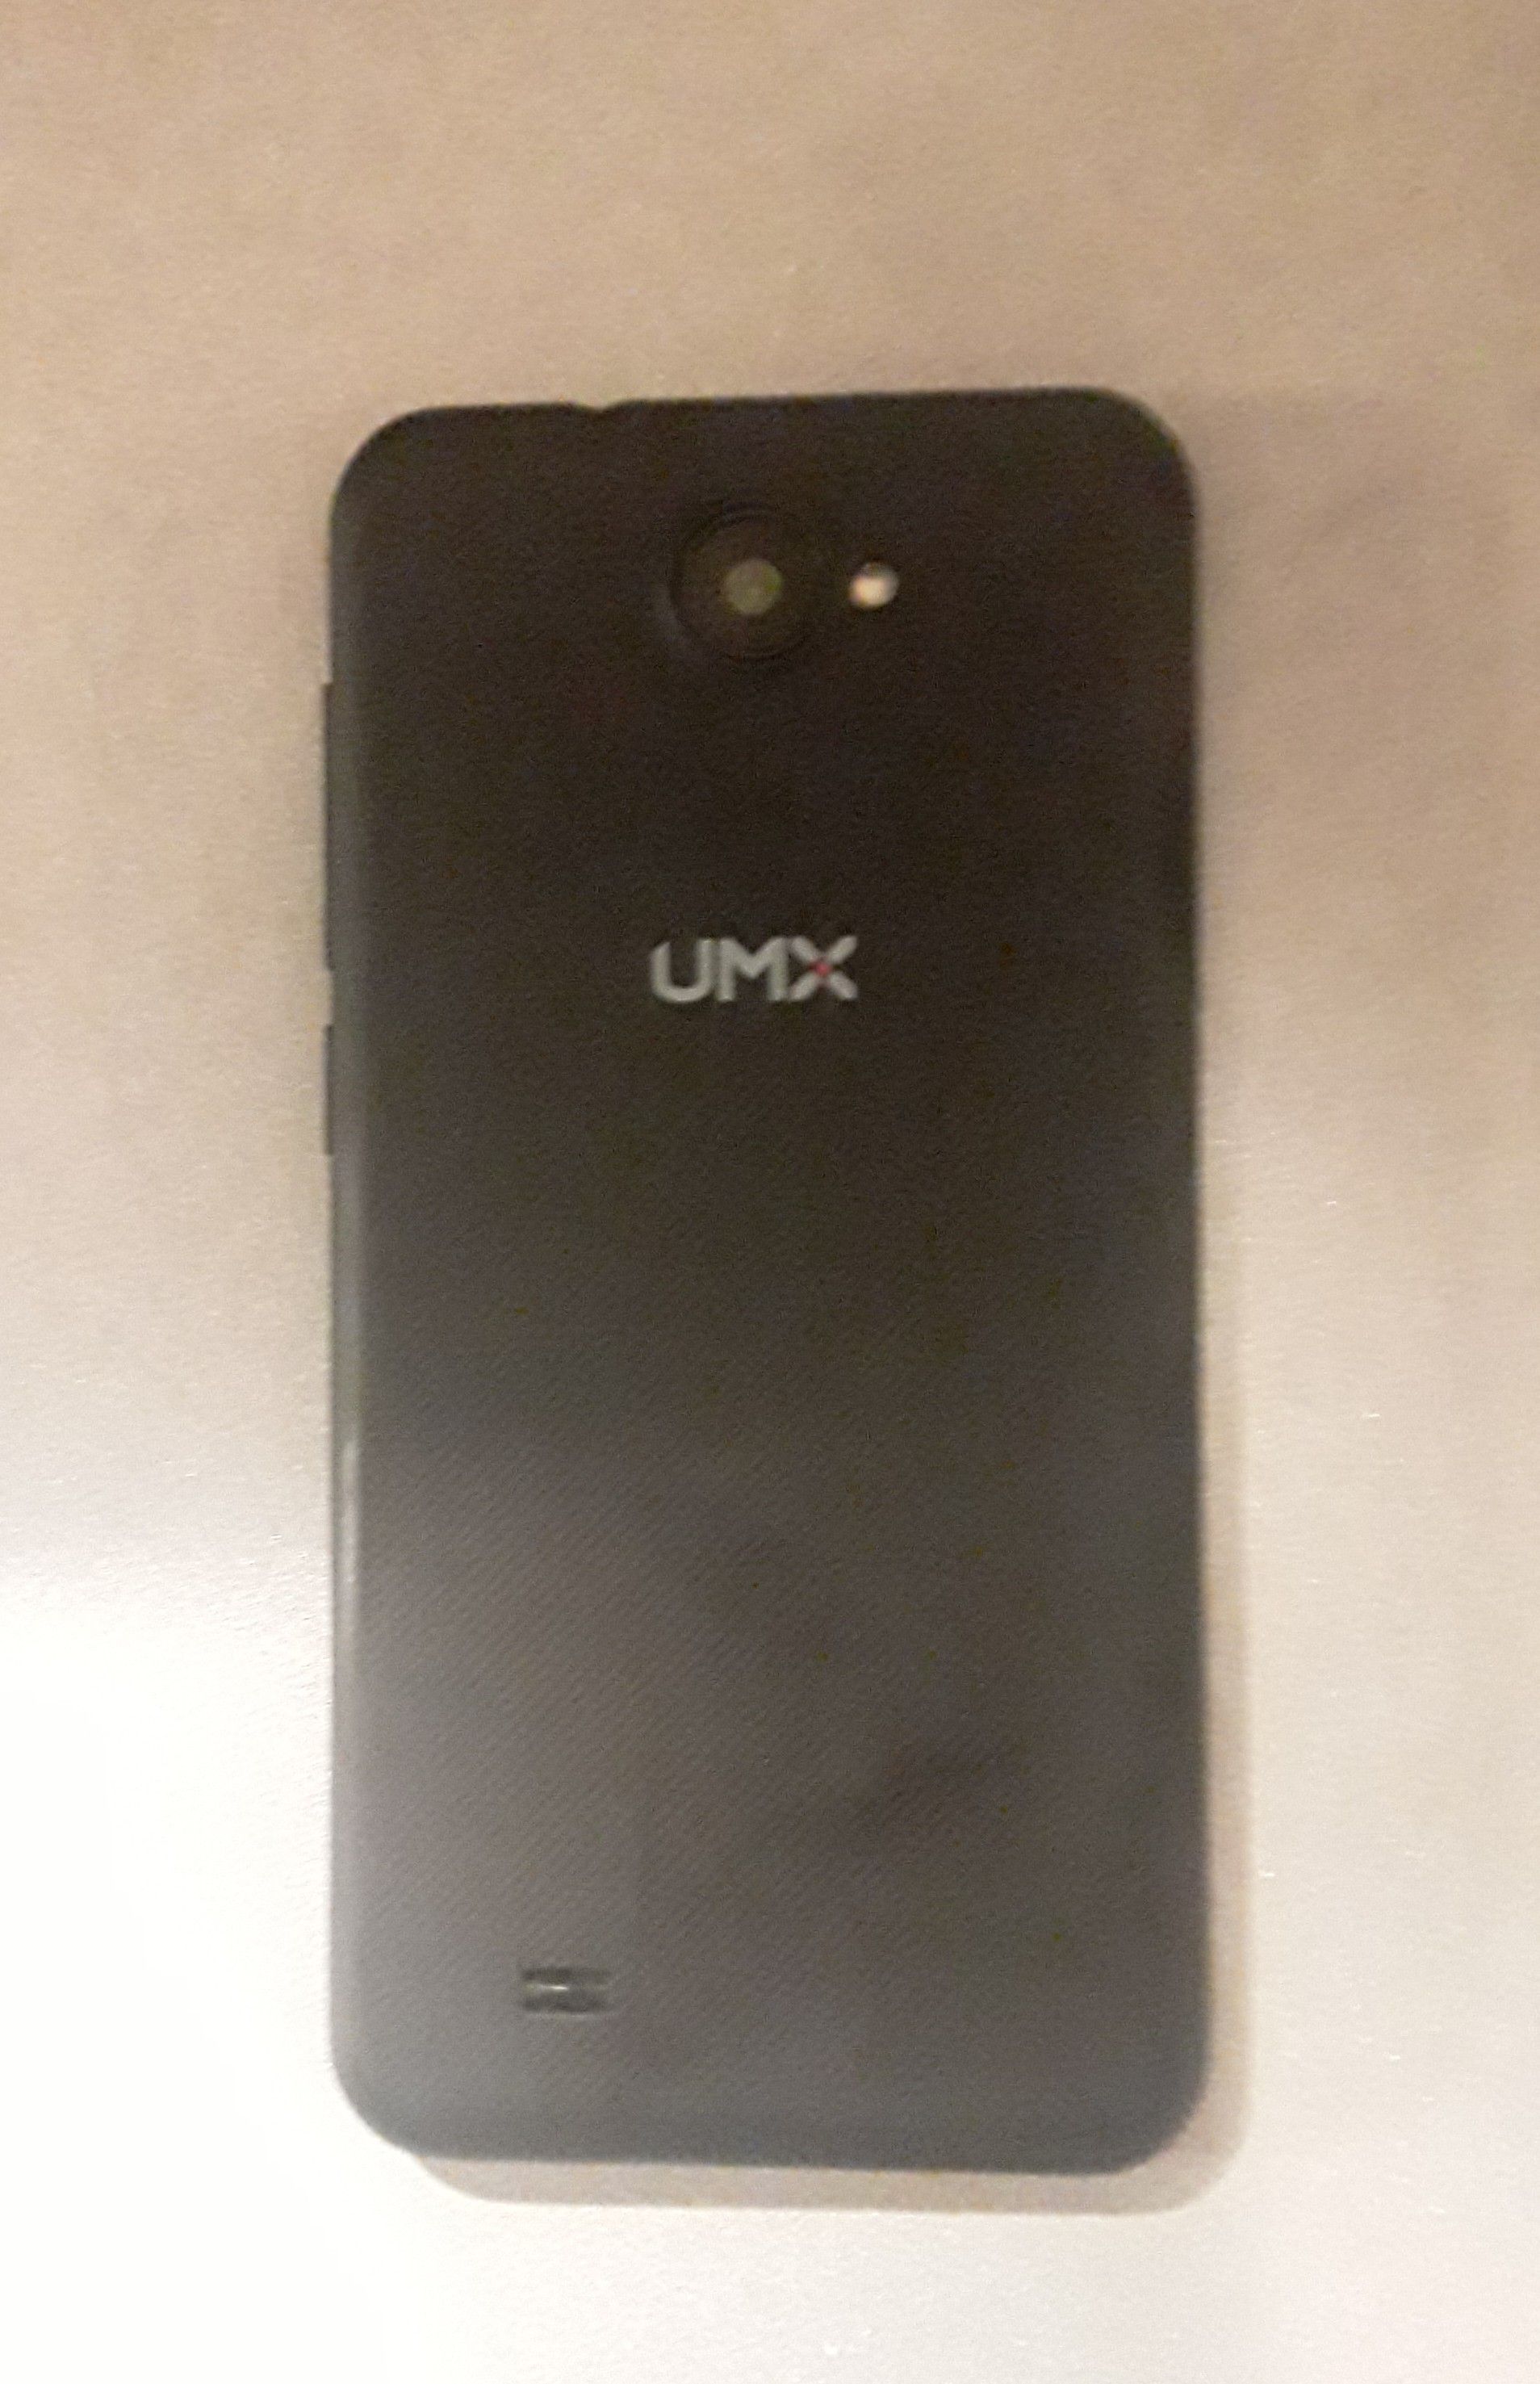 UMX cell phone